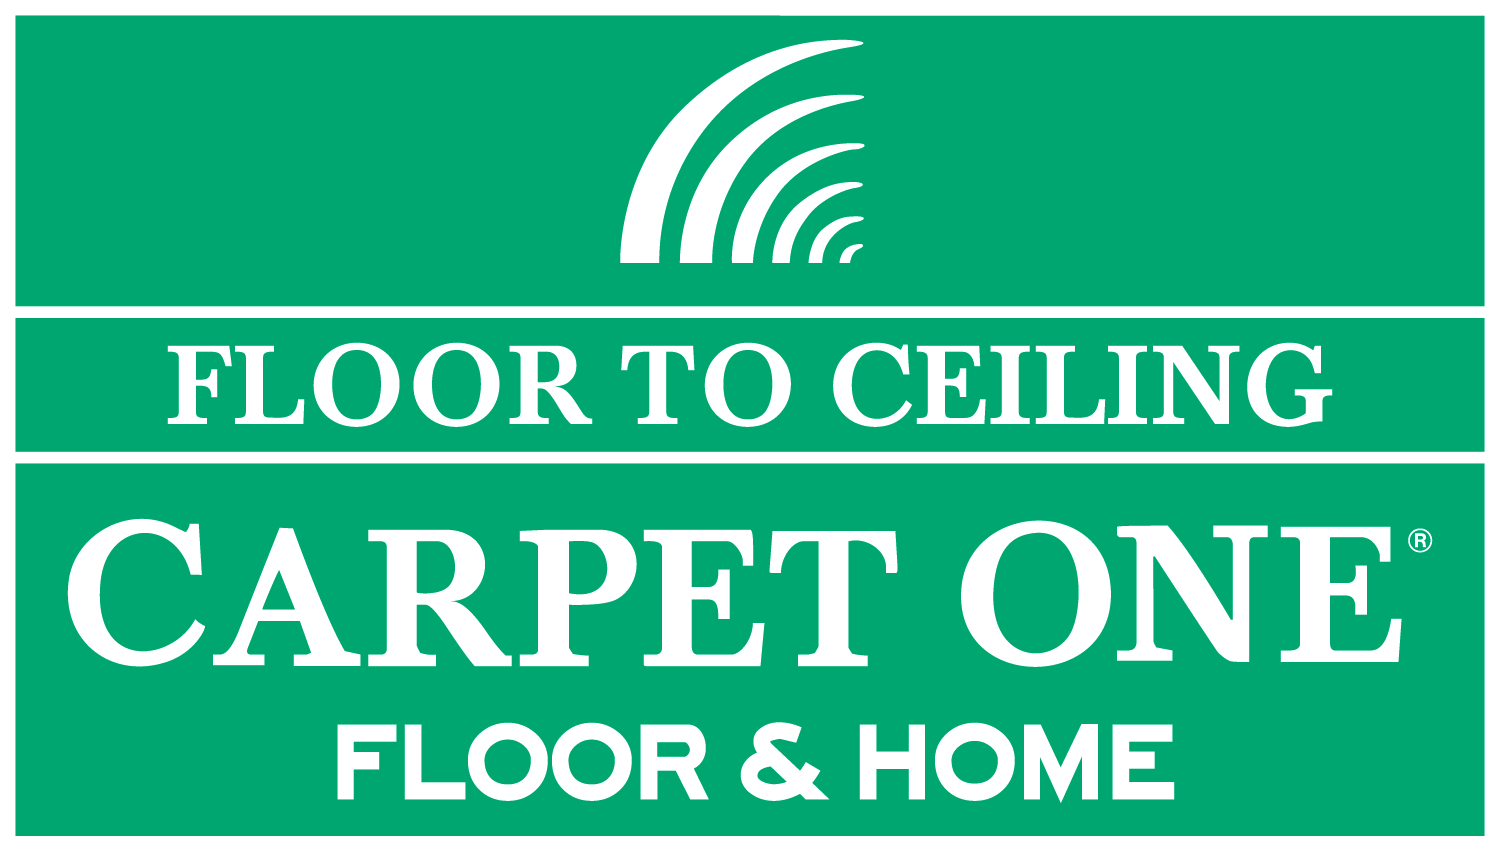 Floor to Ceiling Carpet One